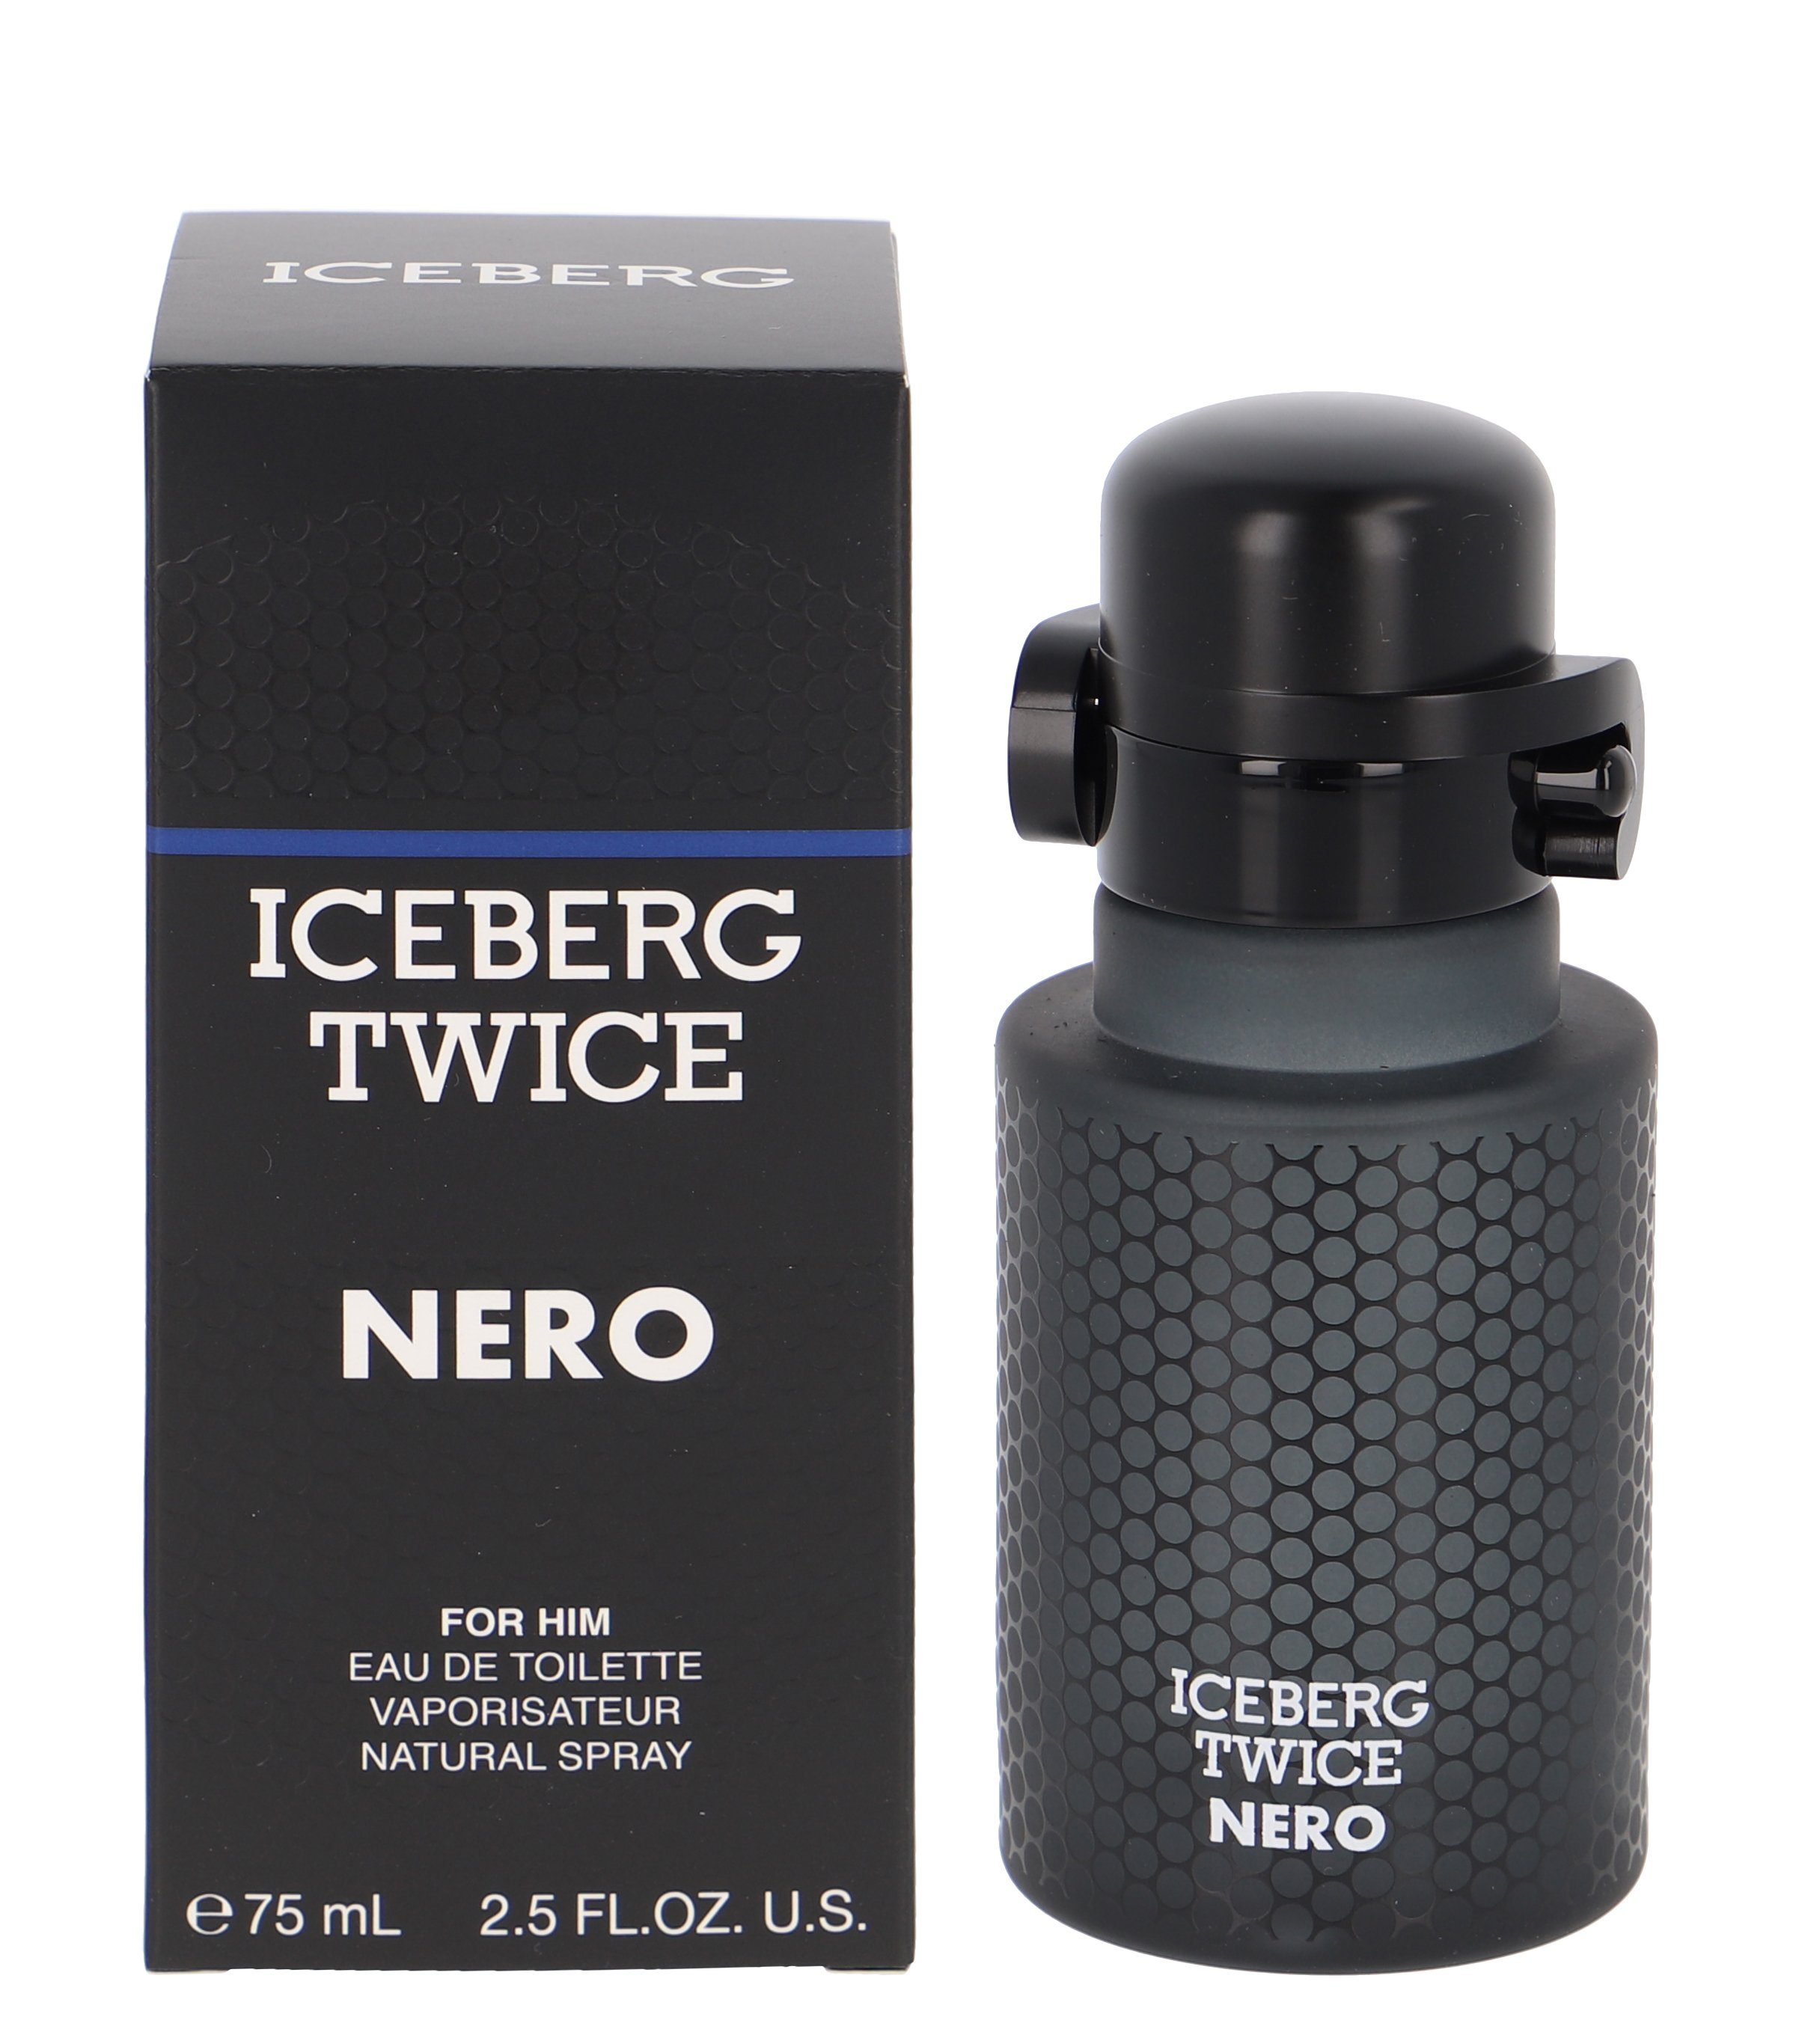 ICEBERG Toilette Eau de Twice Homme Nero Iceberg